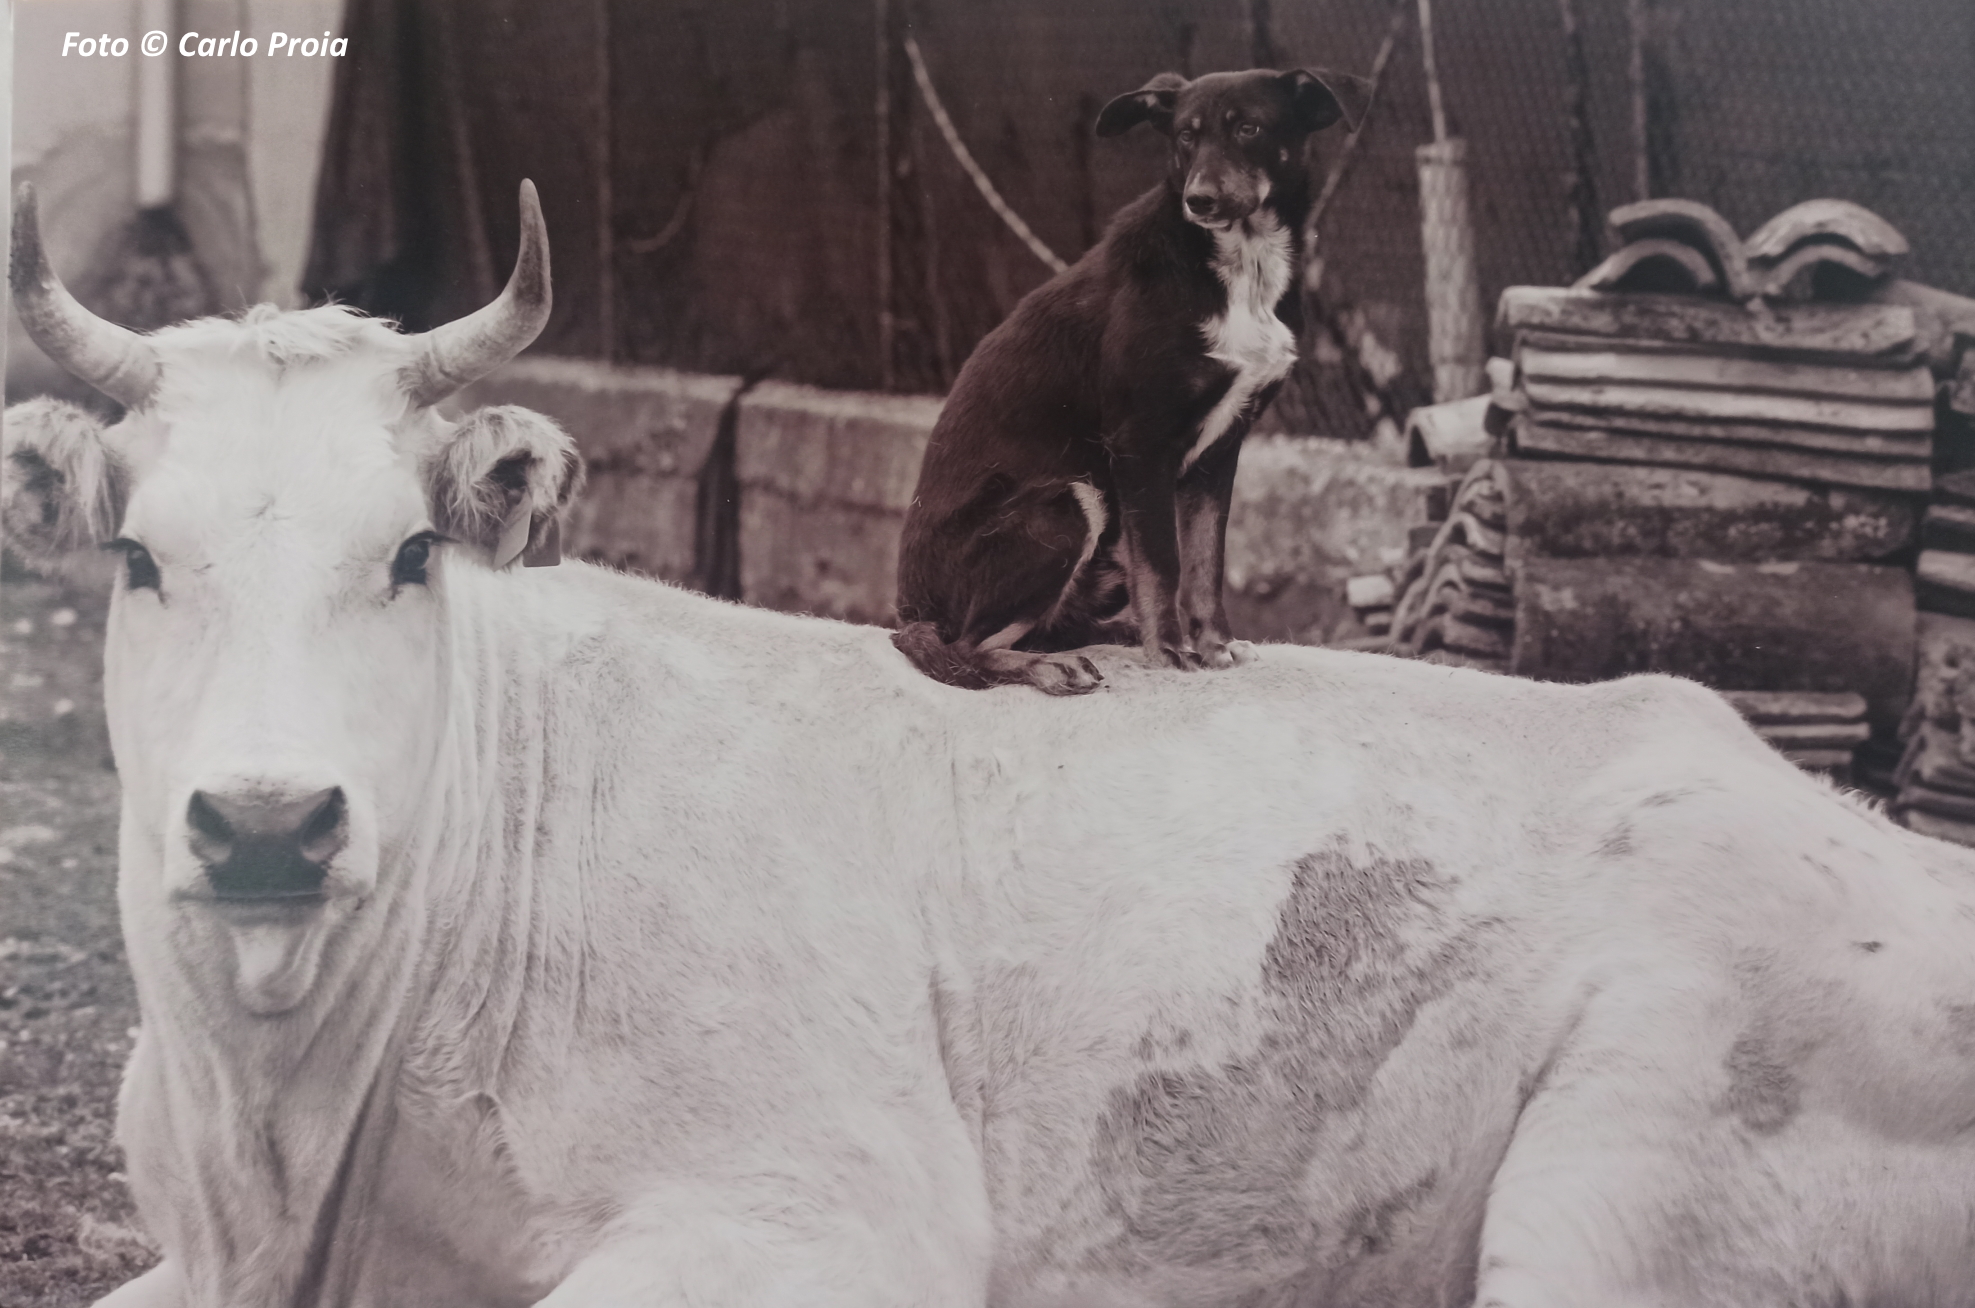 Vacca col cane di Carlo Proia: un cane siede sul dorso di una mucca sdraiata a terra